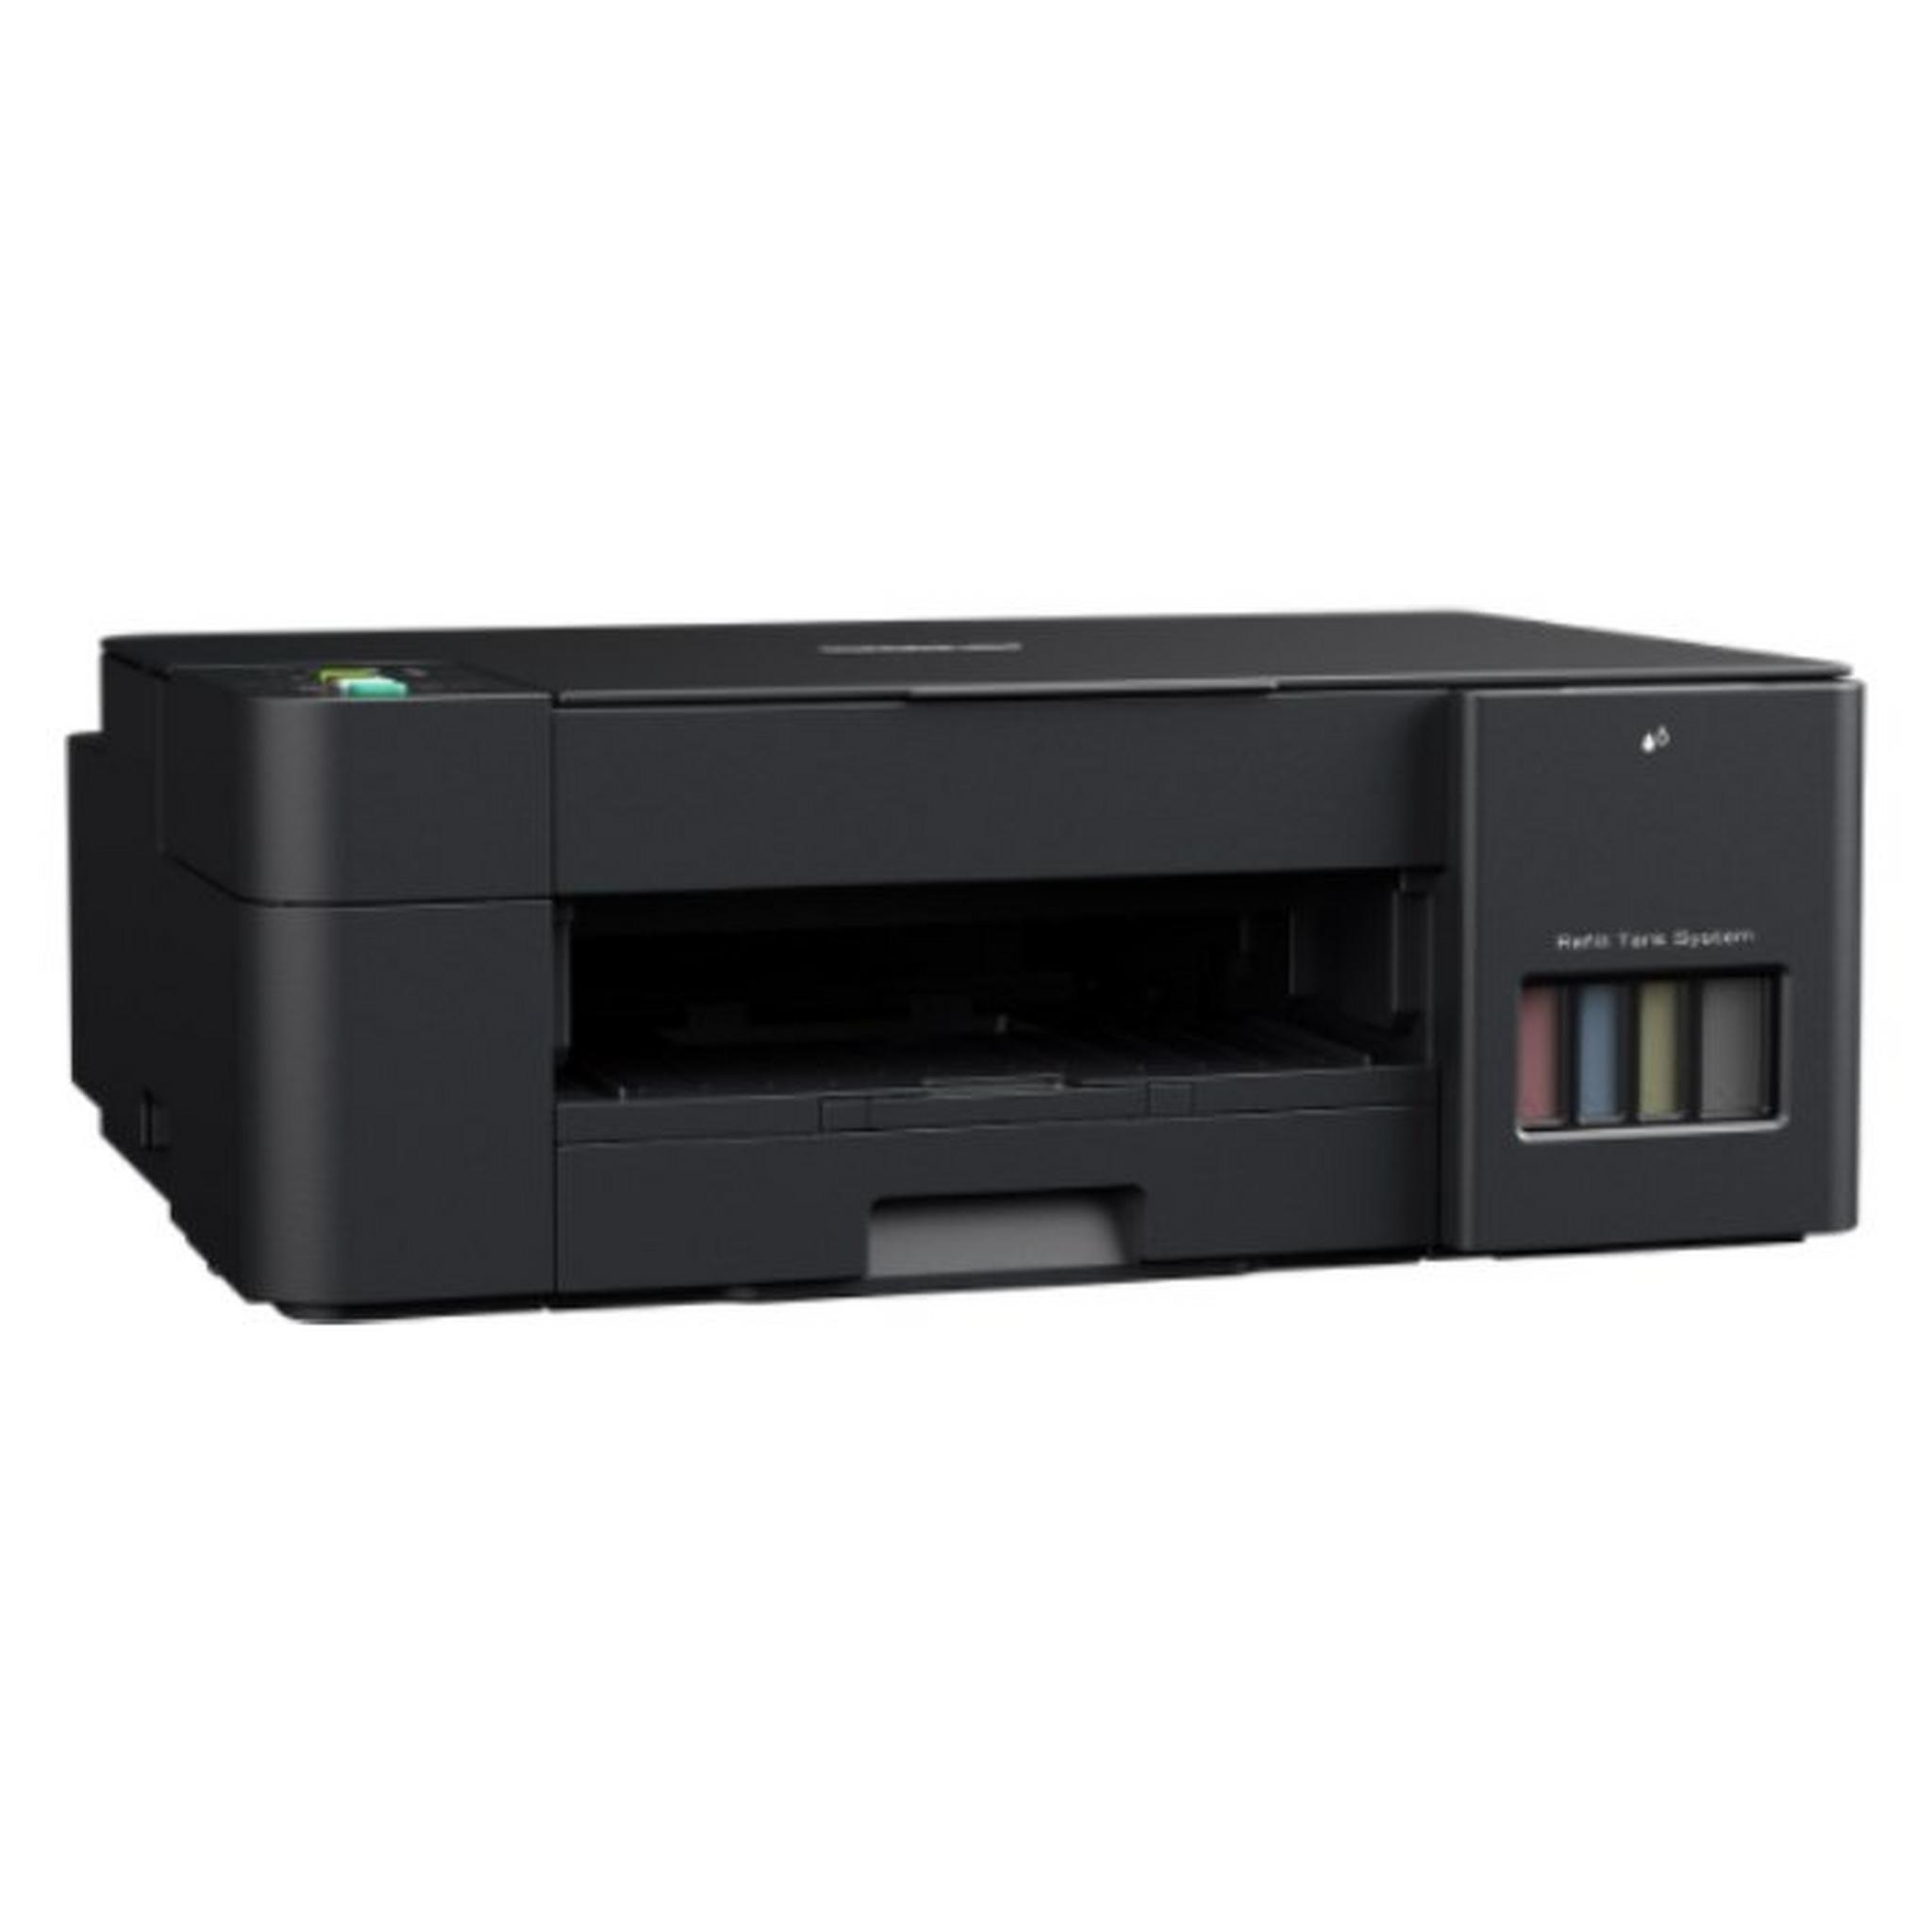 Brother 3 in 1 Inkjet Printer (DCP-T420W)